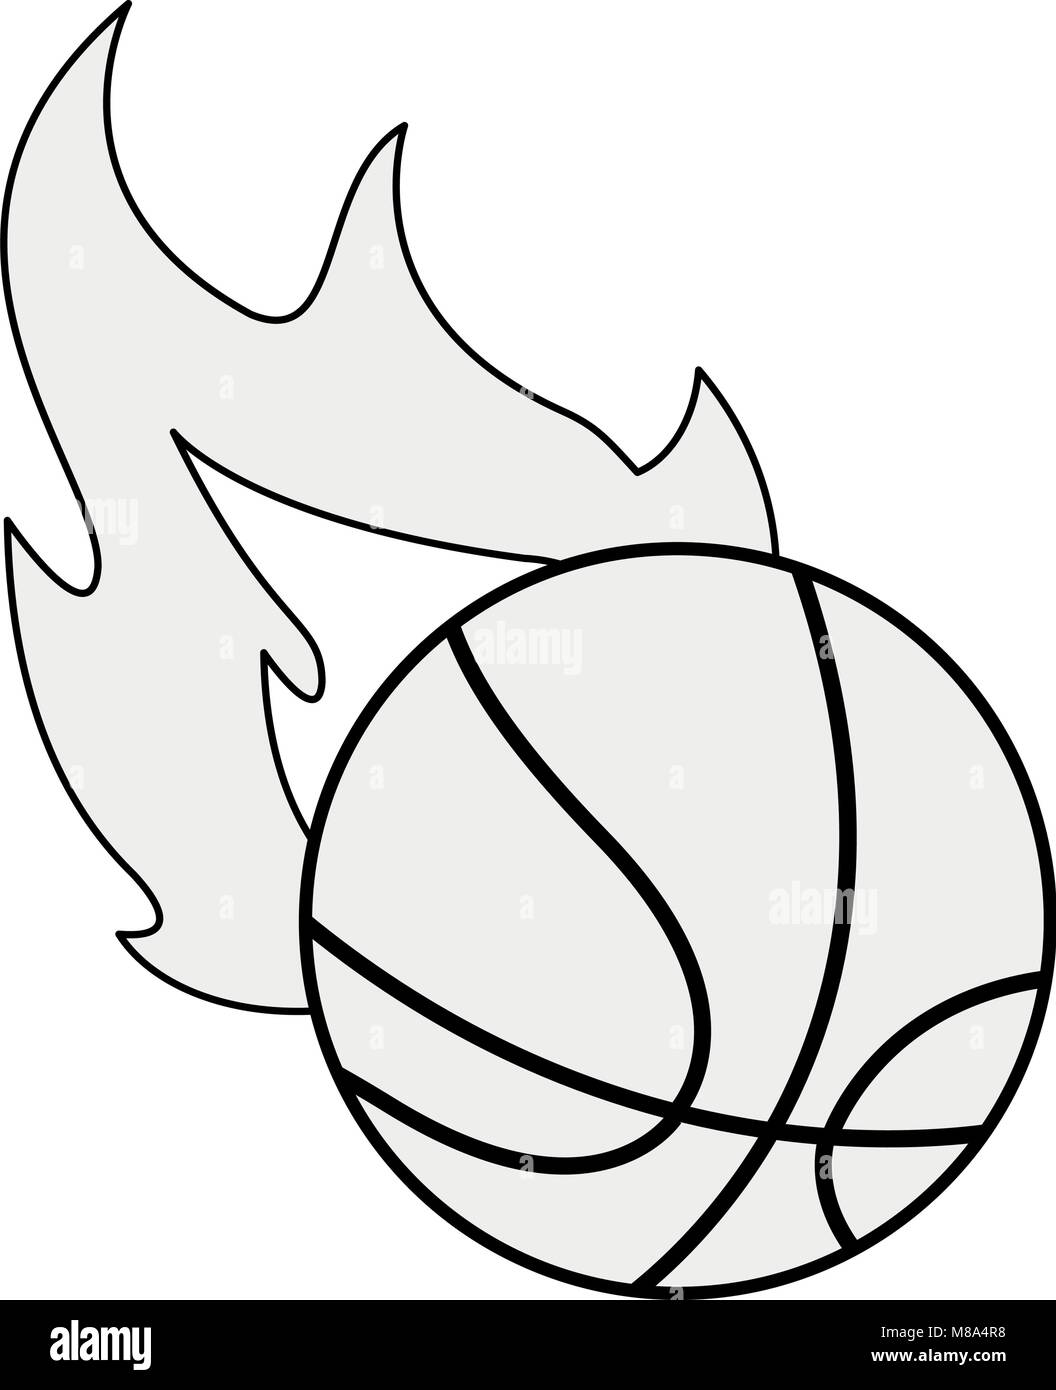 Basketball ball on fire vector illustration graphic design Stock Vector